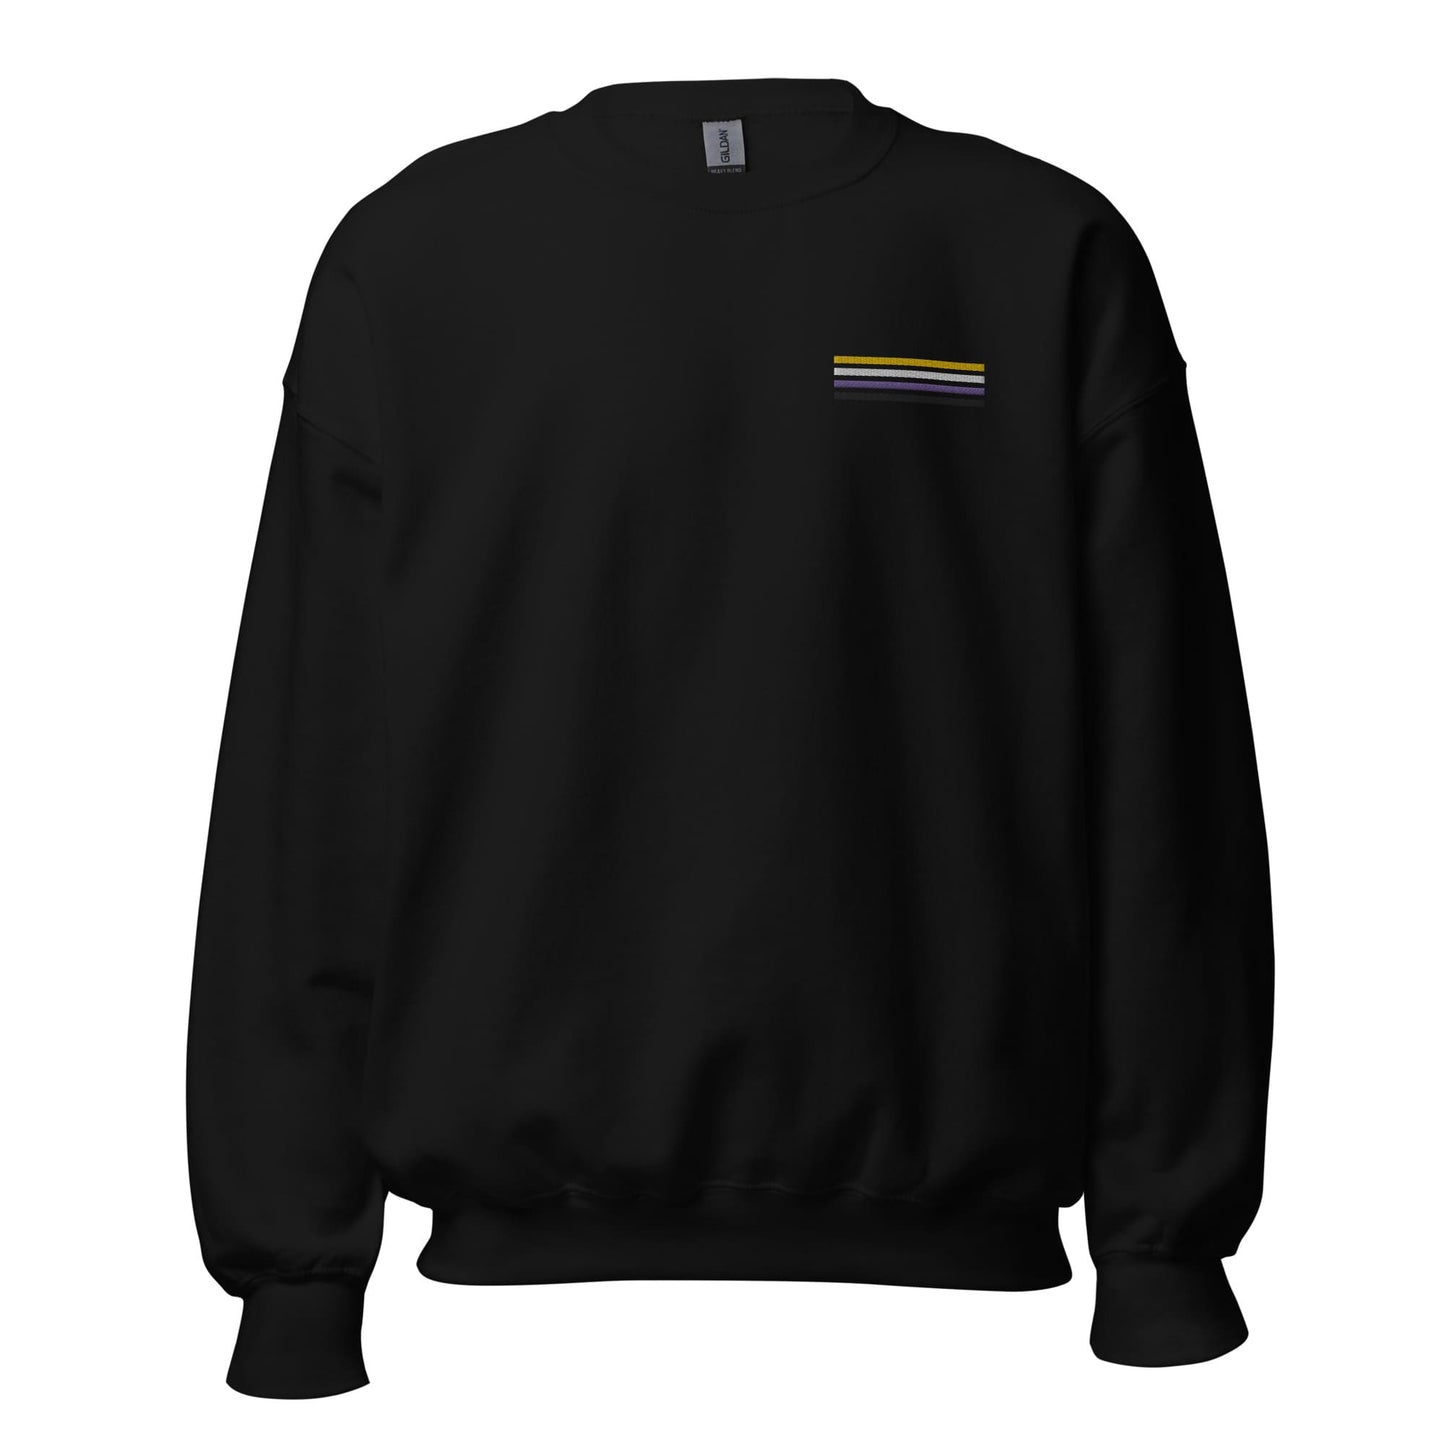 nonbinary sweatshirt, subtle enby pride embroidered pocket design sweater, hang